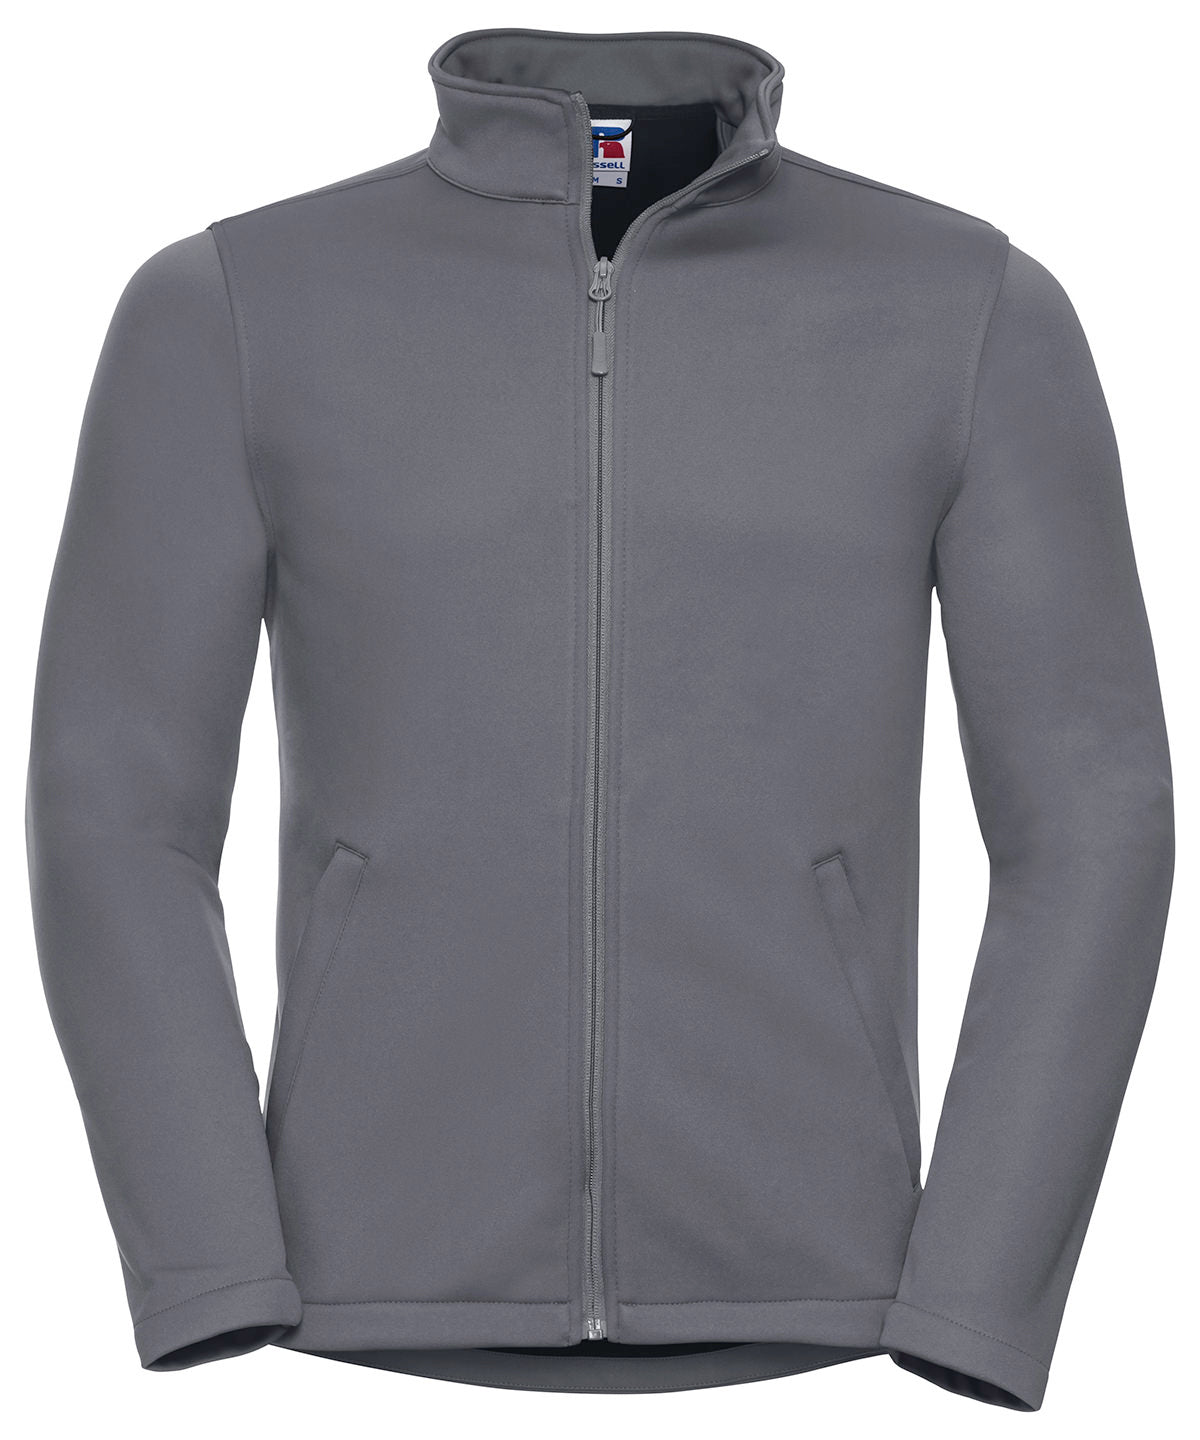 Personalised Jackets - Black Russell Europe Smart softshell jacket